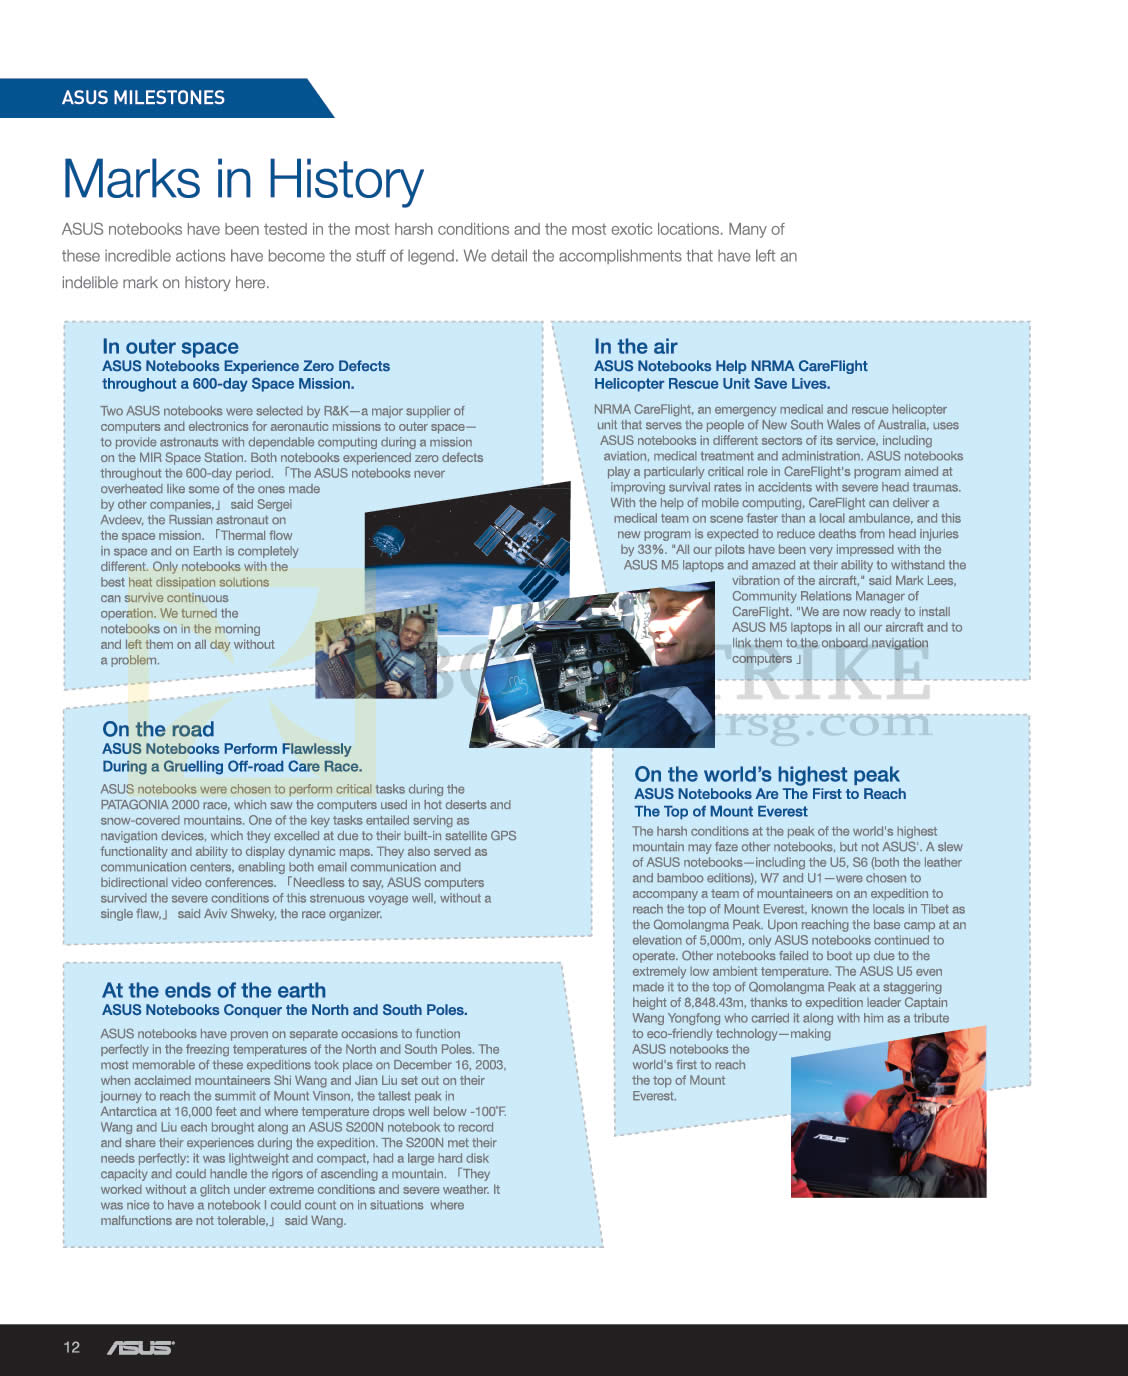 SITEX 2012 price list image brochure of ASUS Milestones, Marks In History